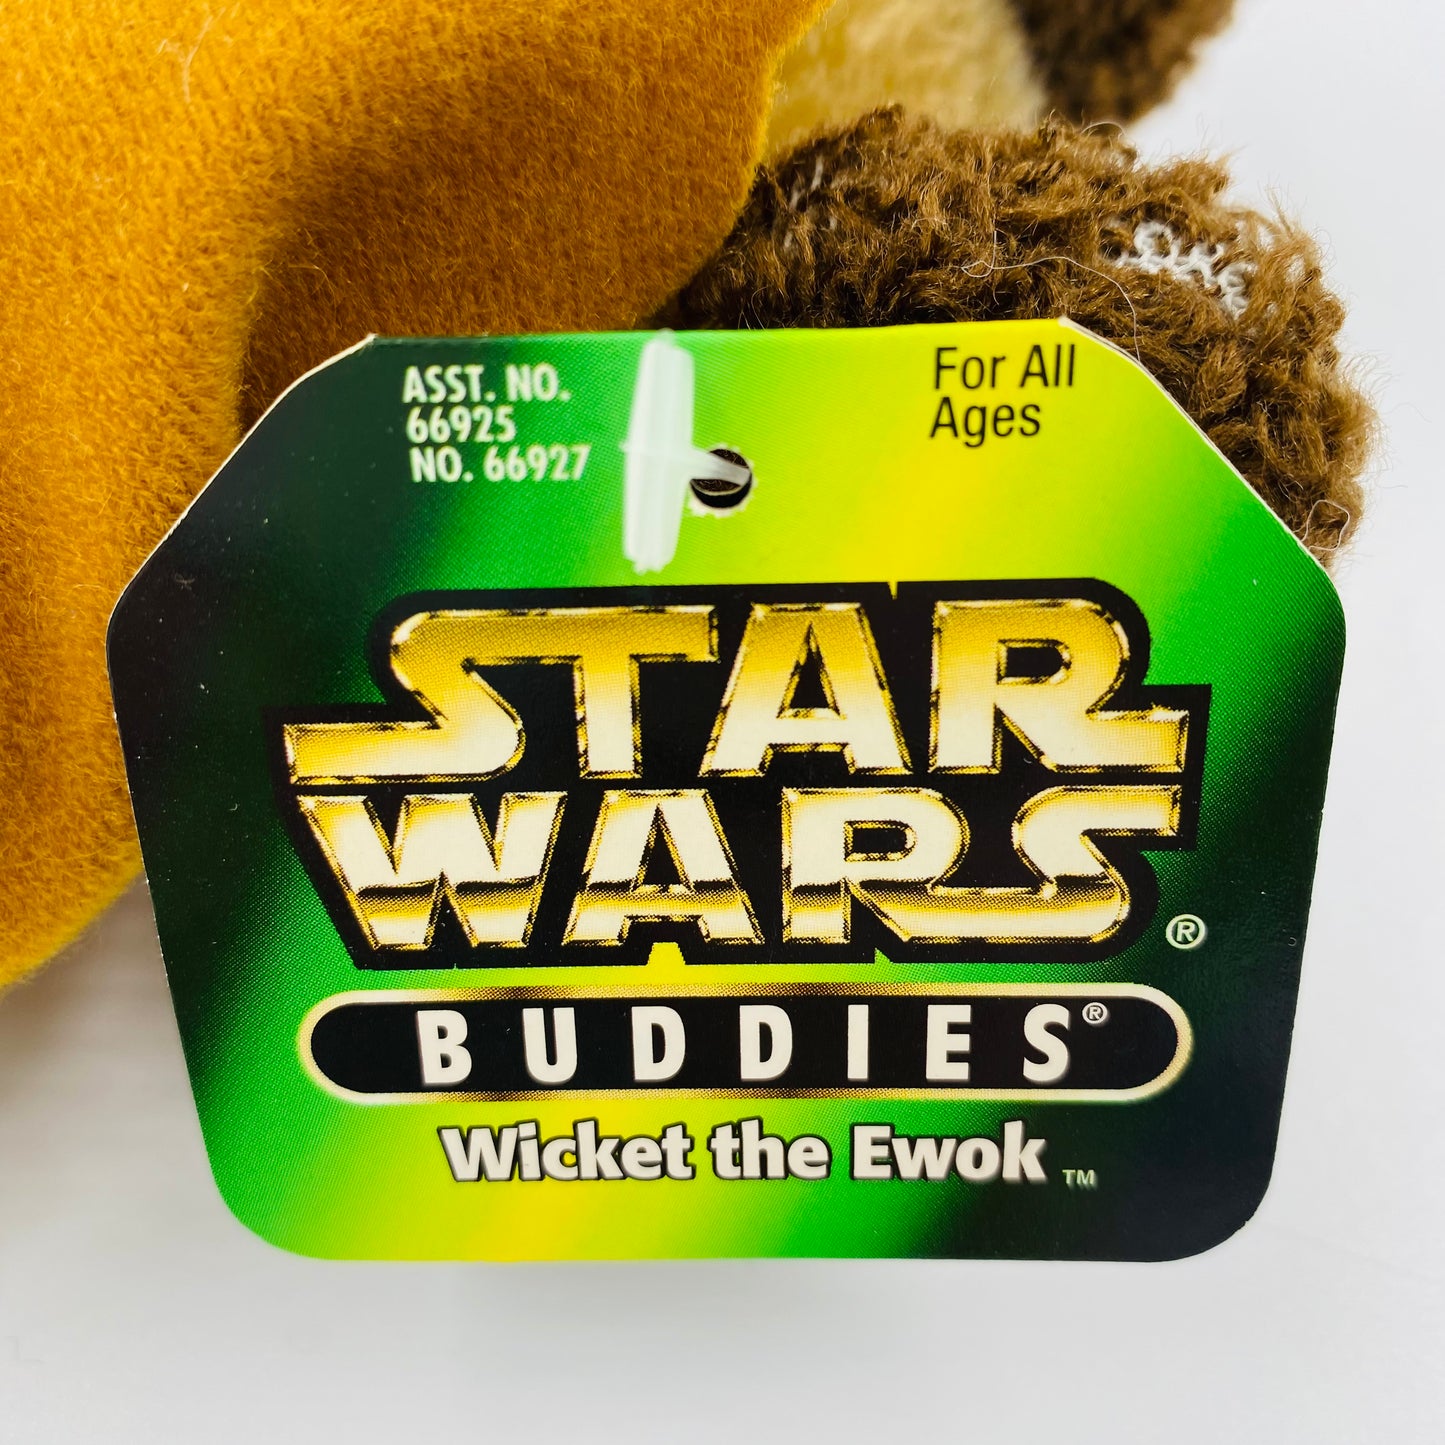 Star Wars Buddies: Wicket the Ewok bean bag plush (1997) Kenner